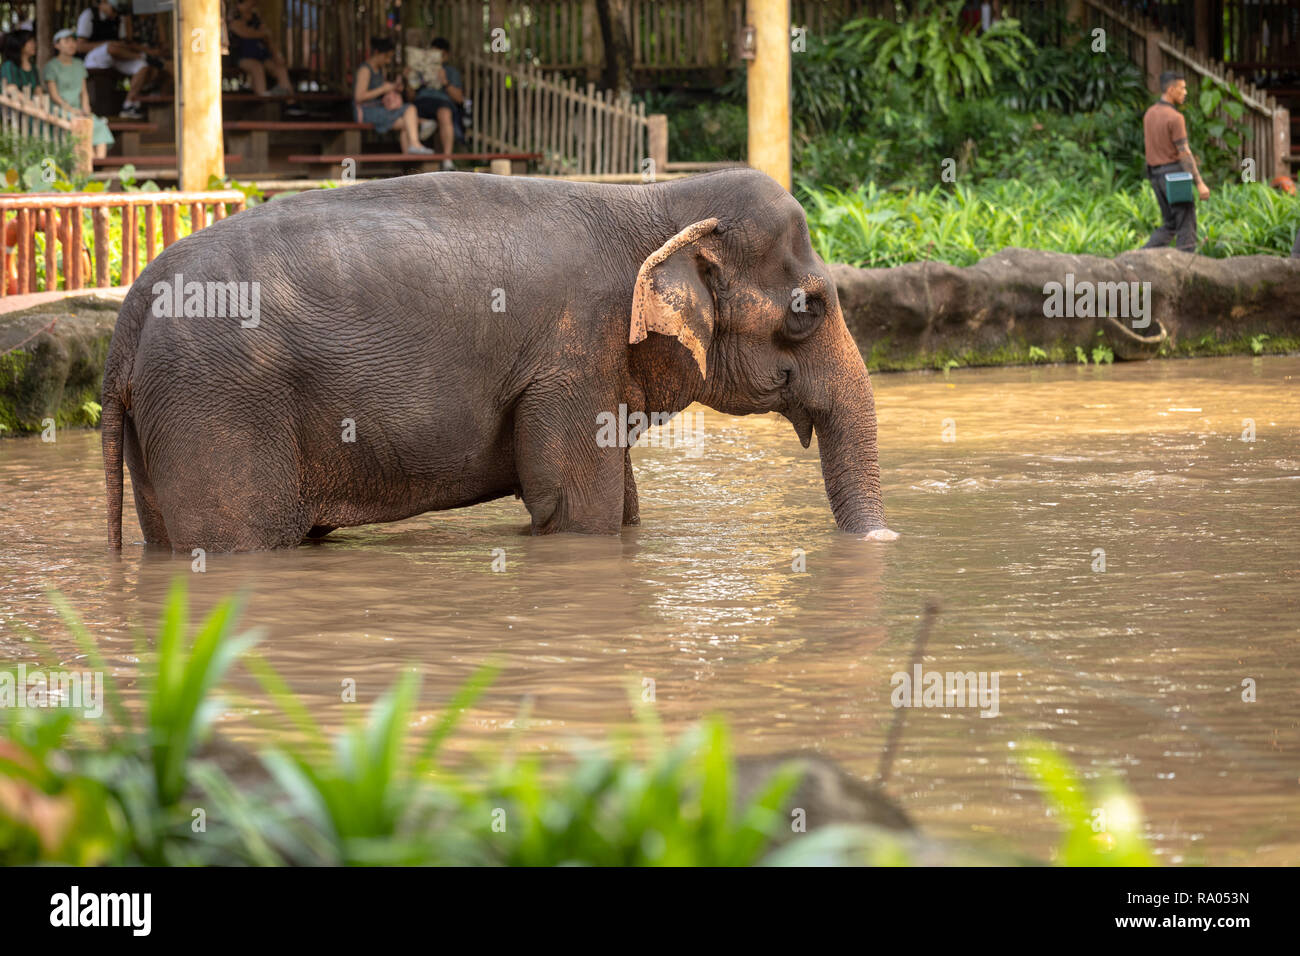 Singapore, december 2018: Asian elephant, Elephas maximus, taking a bath in Singapore Zoo. Stock Photo